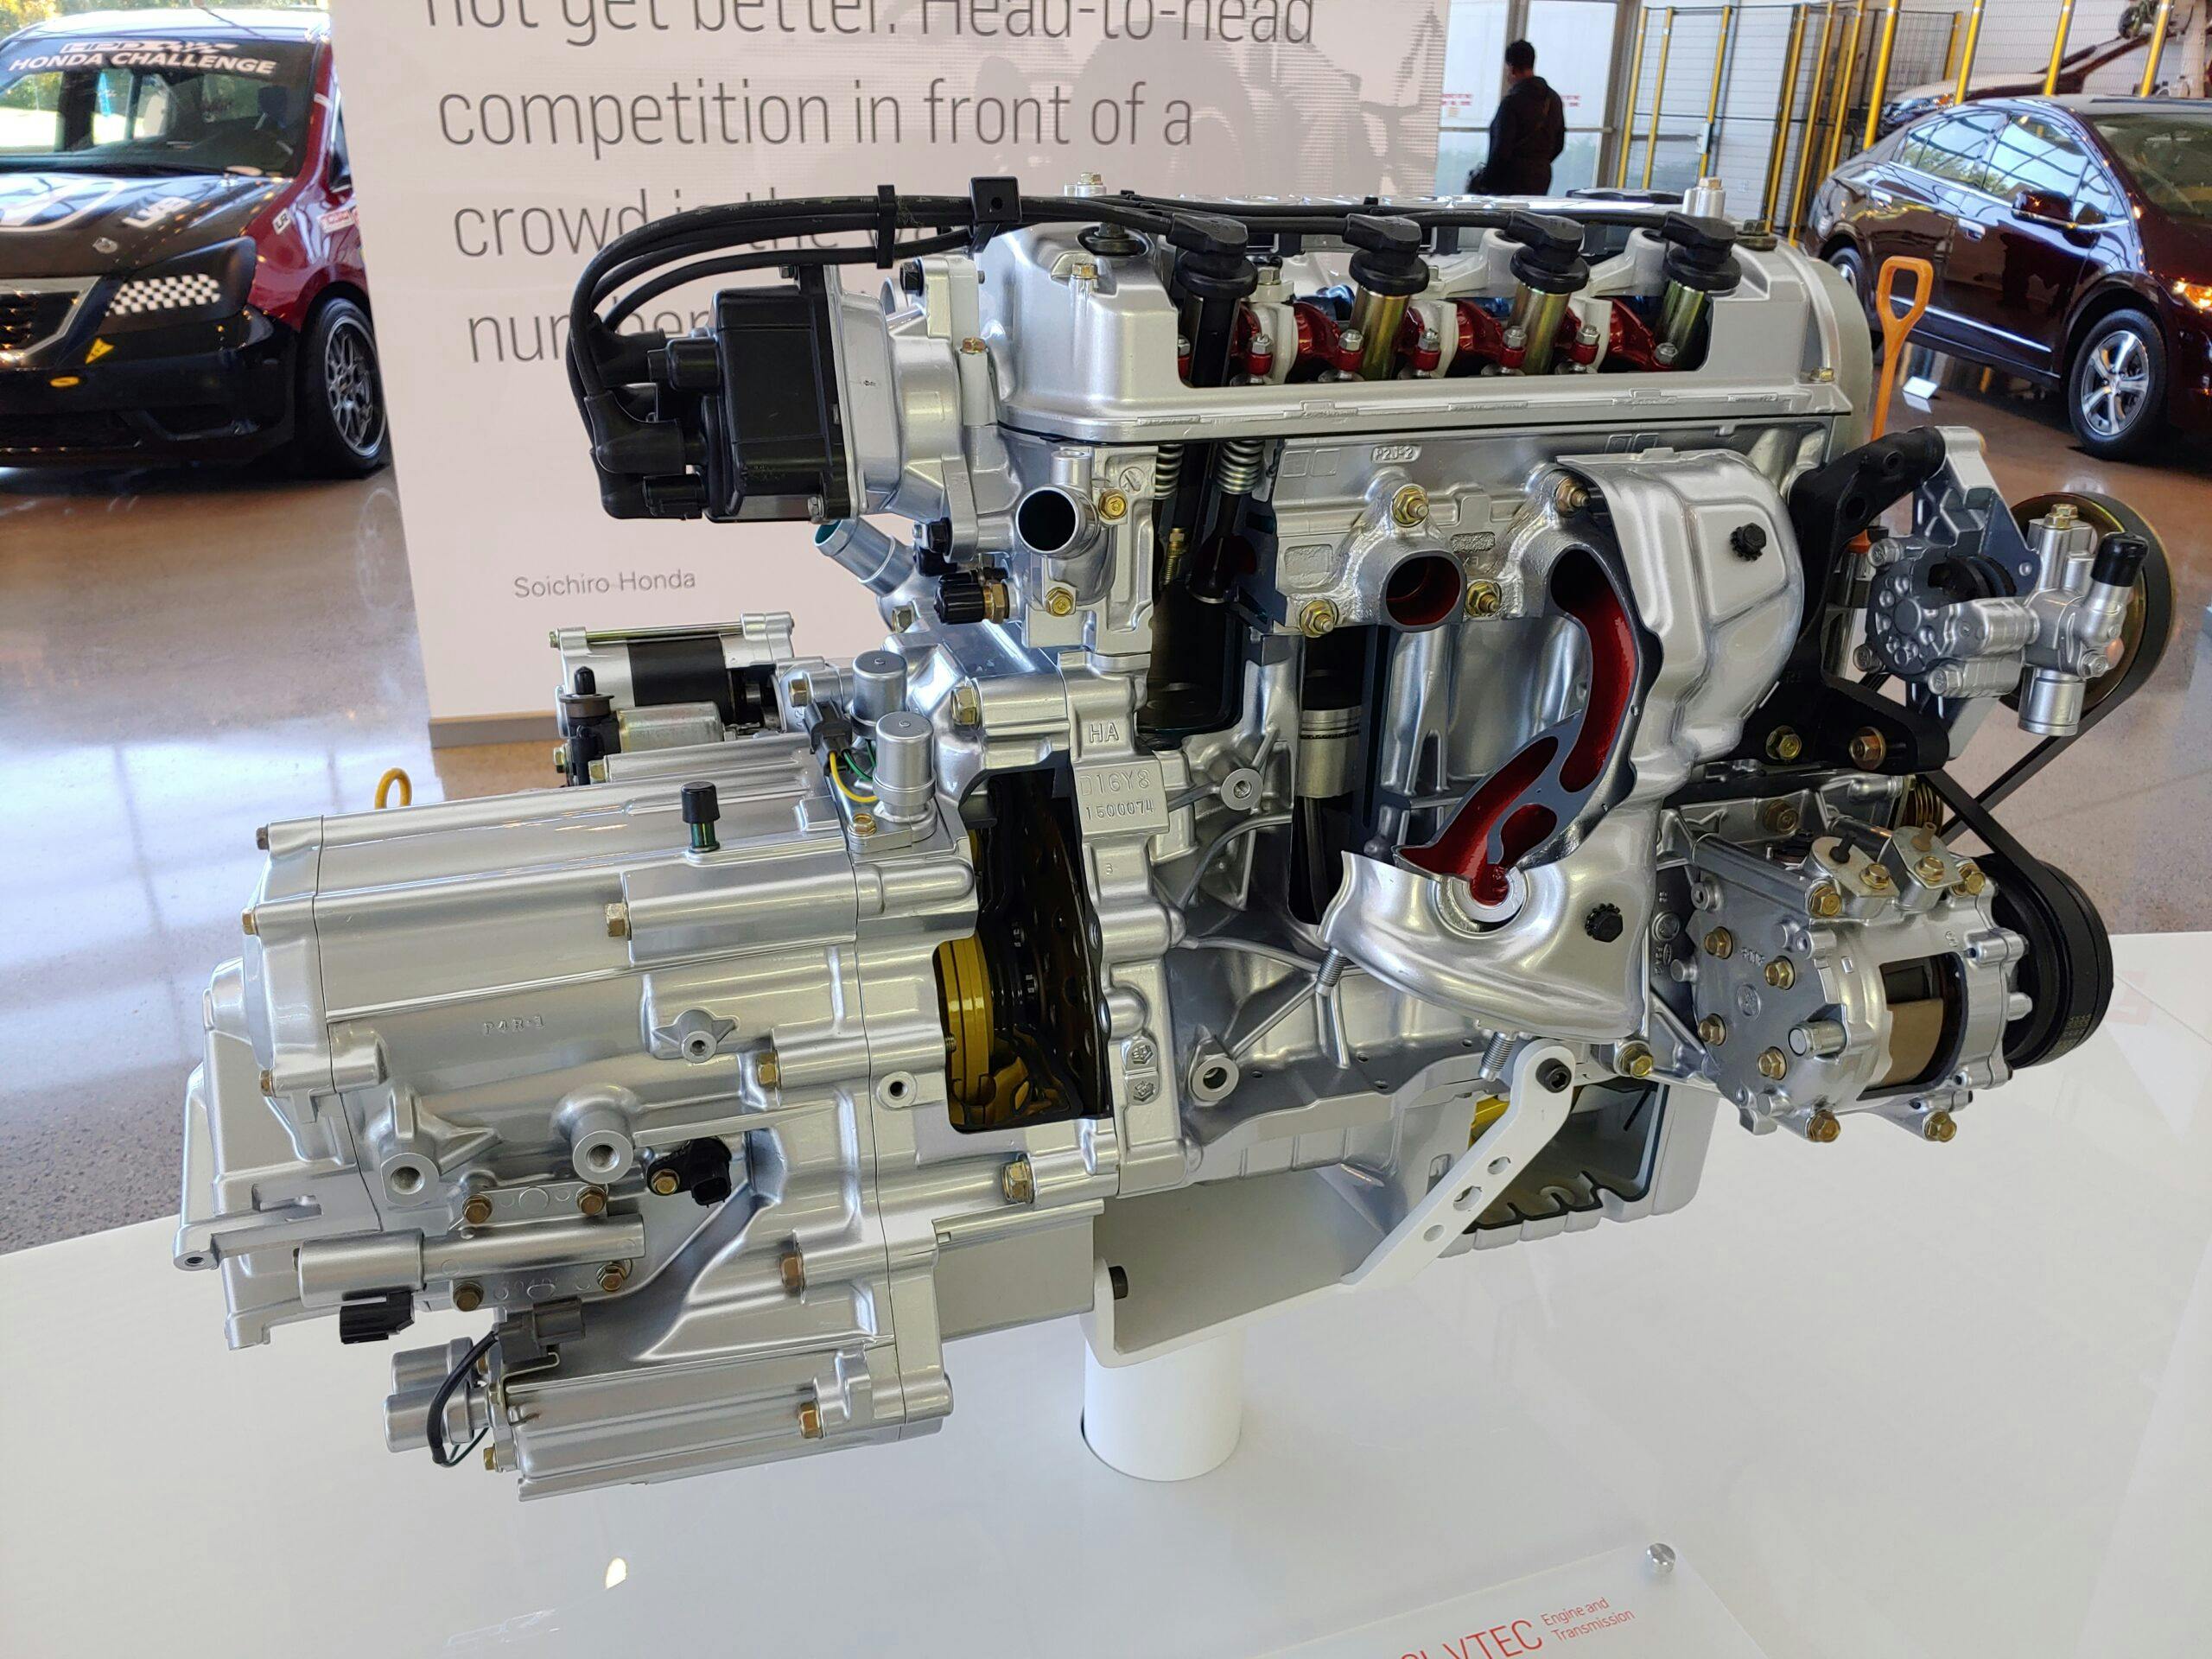 Honda Heritage Center engine cutaway display